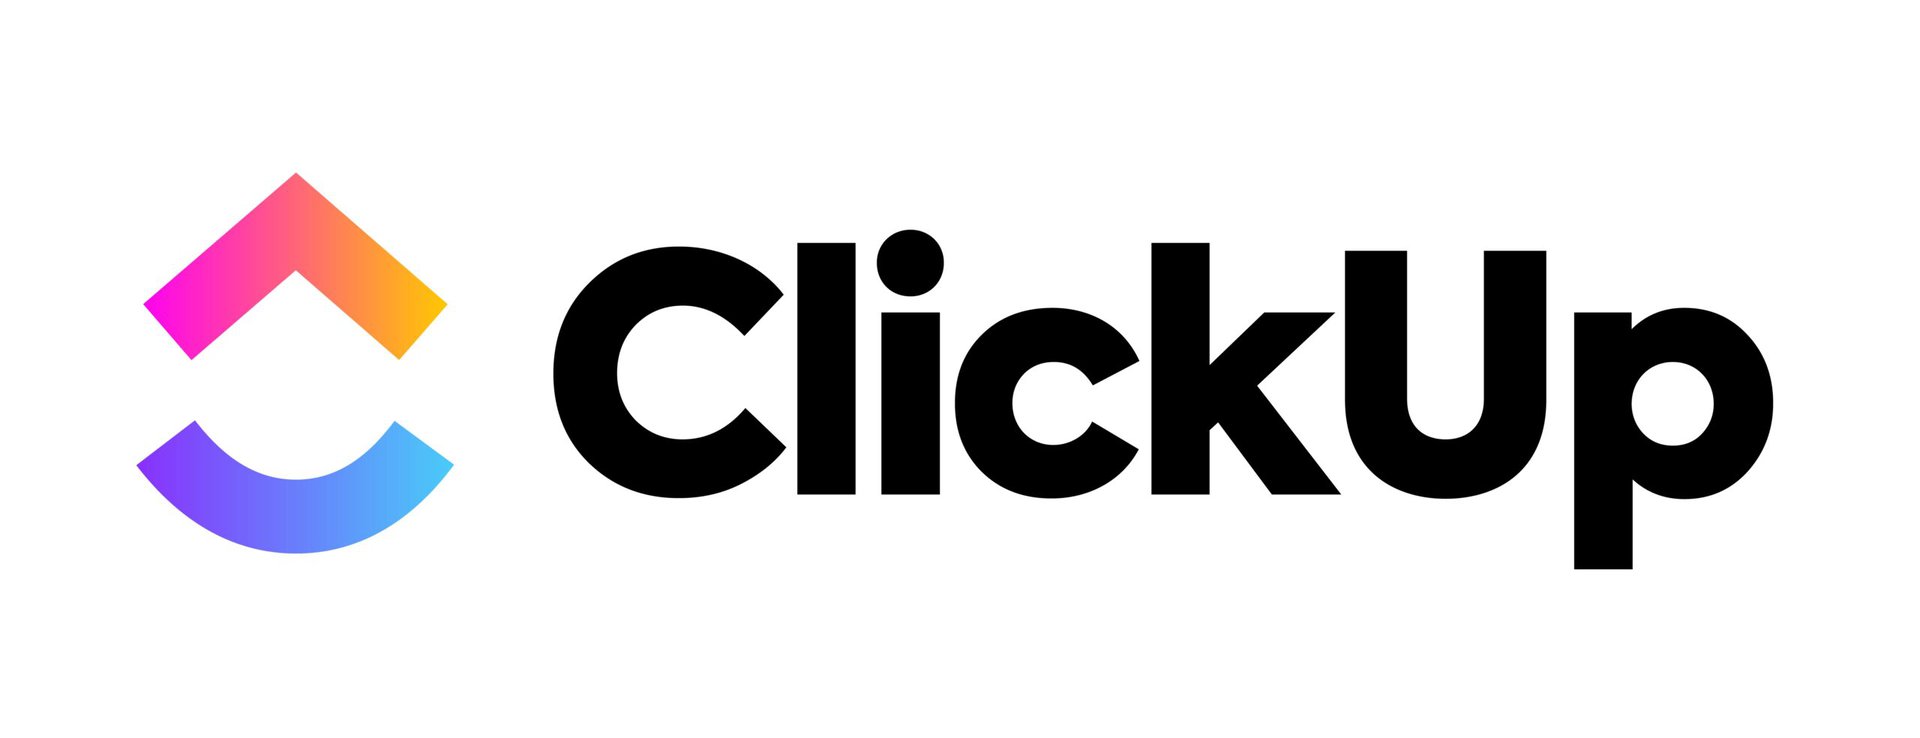 clickup logo text